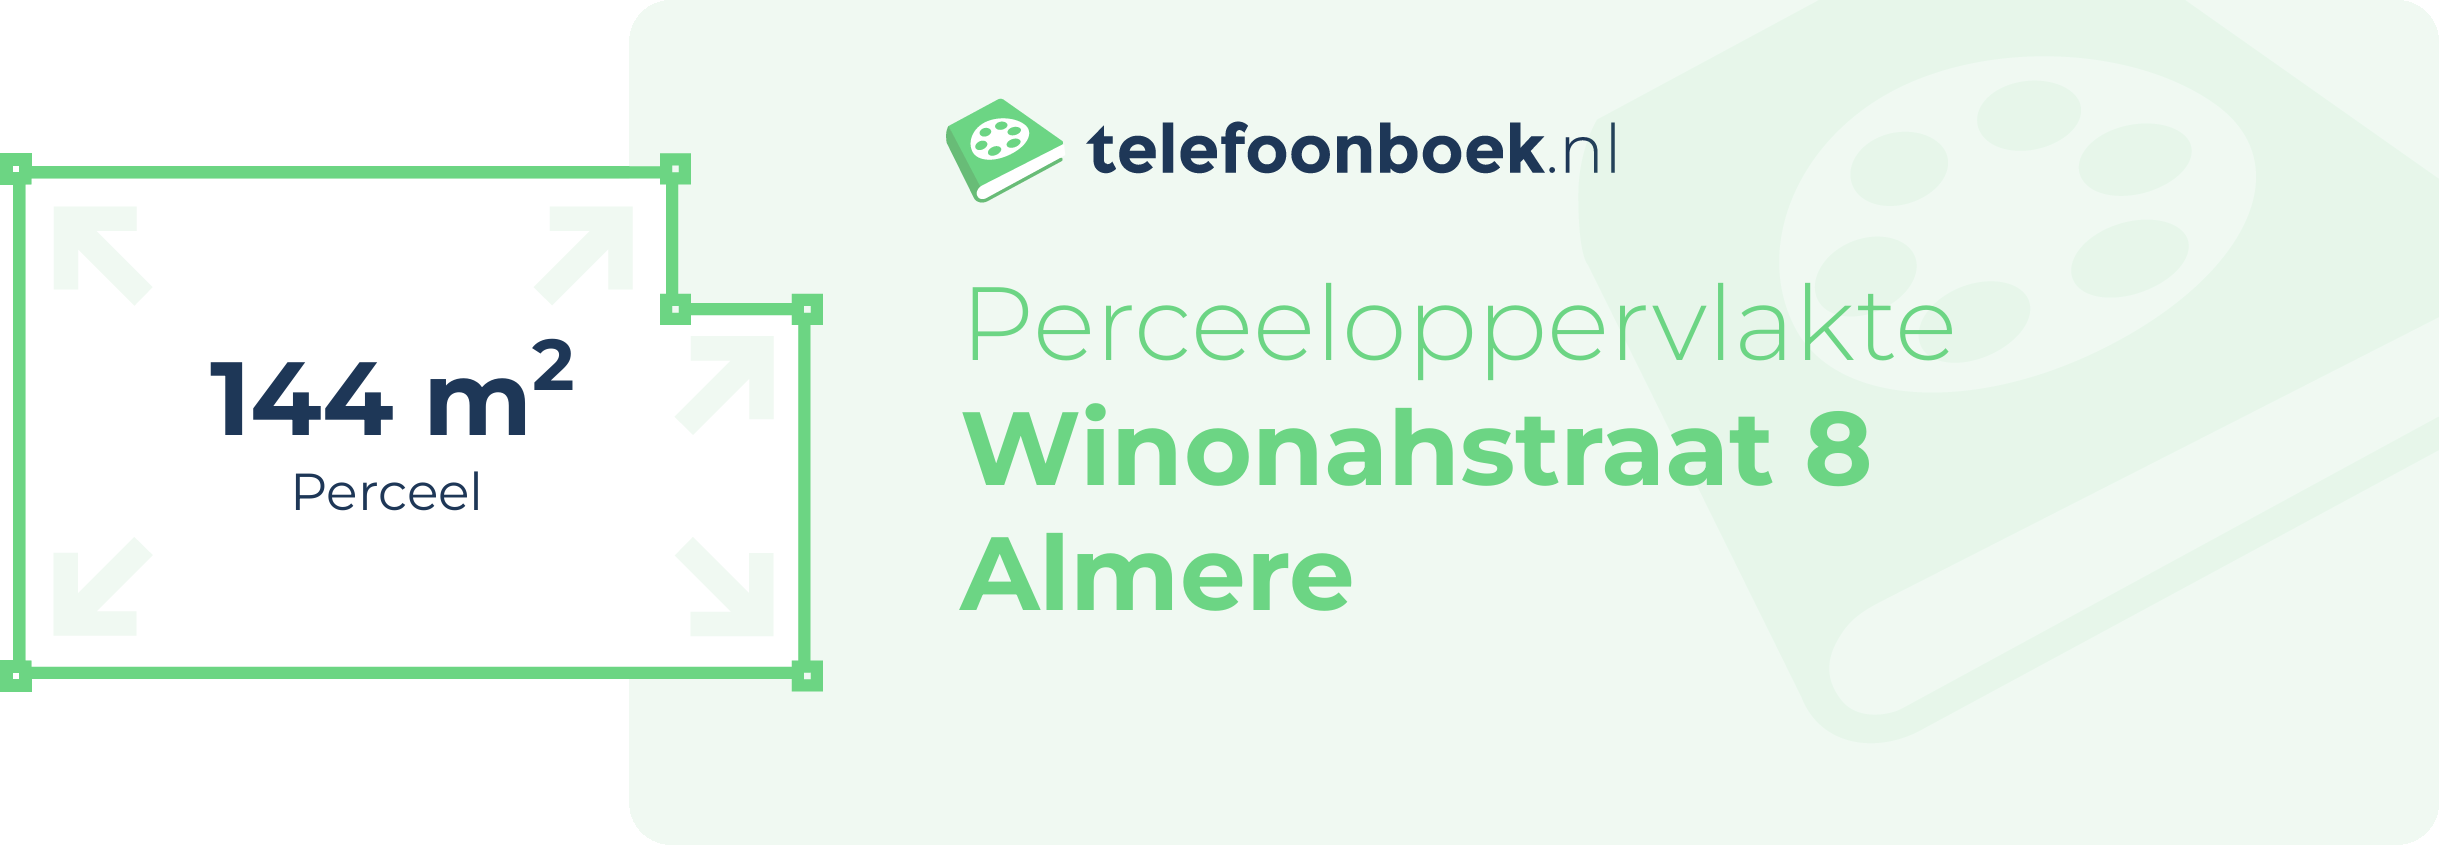 Perceeloppervlakte Winonahstraat 8 Almere